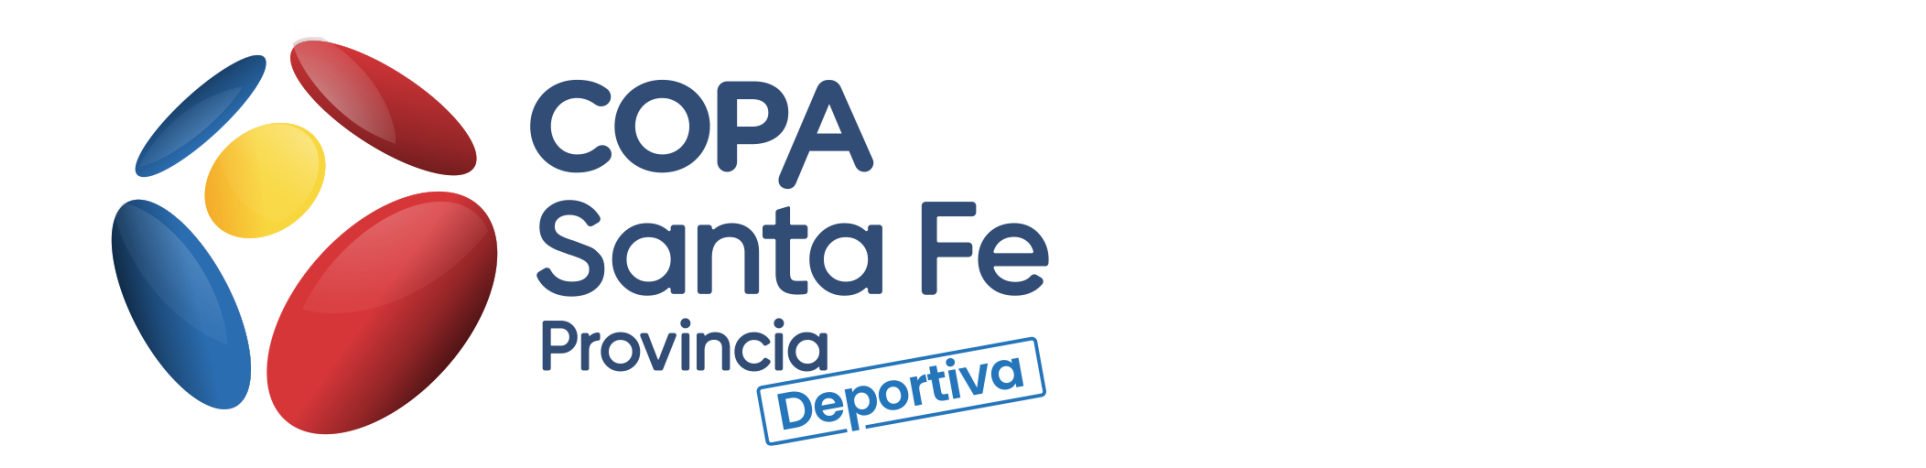 Copa Santa Fe Provincia